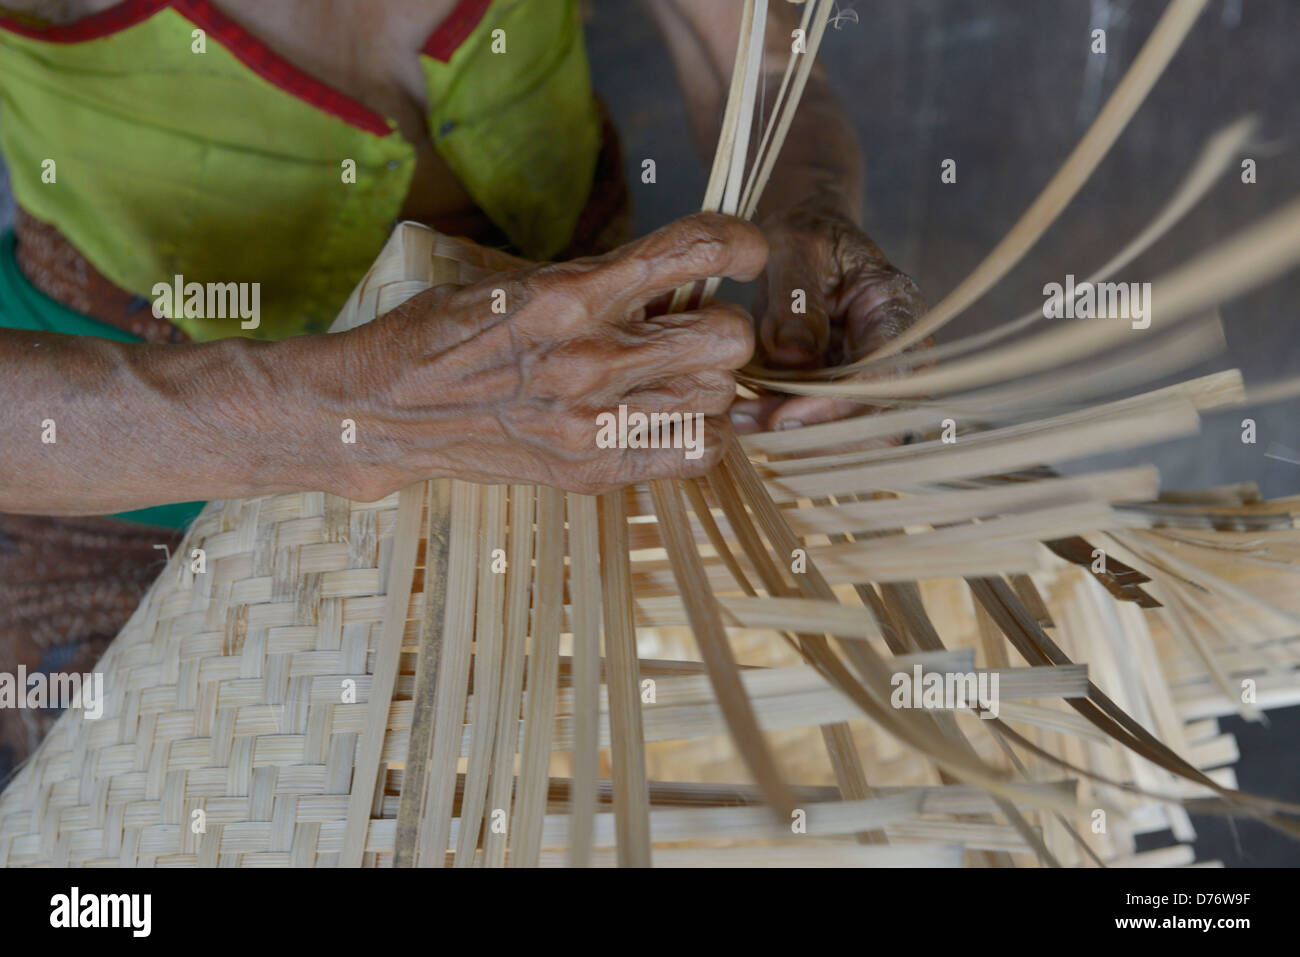 Asia Indonesia Bali Village of Sidatapa, detail of an elderly woman making basketry Stock Photo